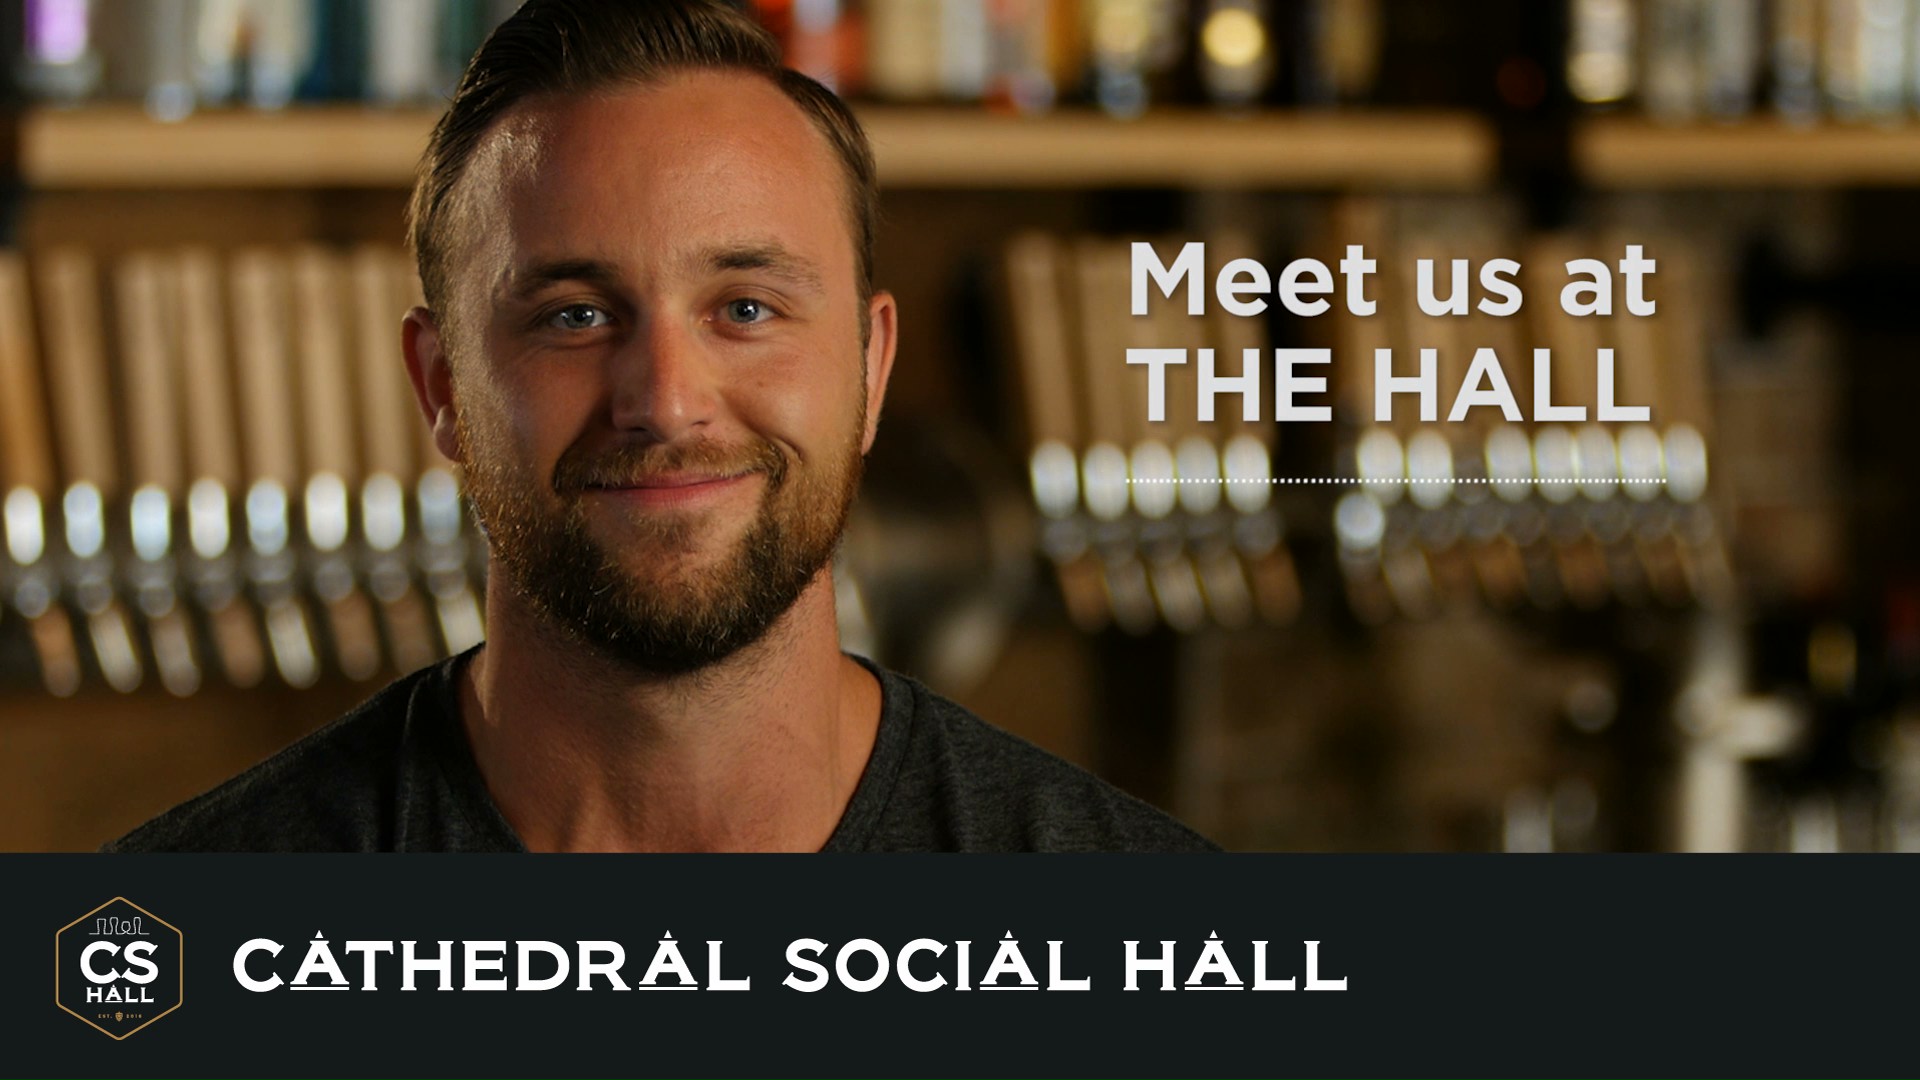 Cathedral Social Hall, Social, Cathedral Social Hall - Team - Ryan, Portfolio Image, Meet Us at the Hall